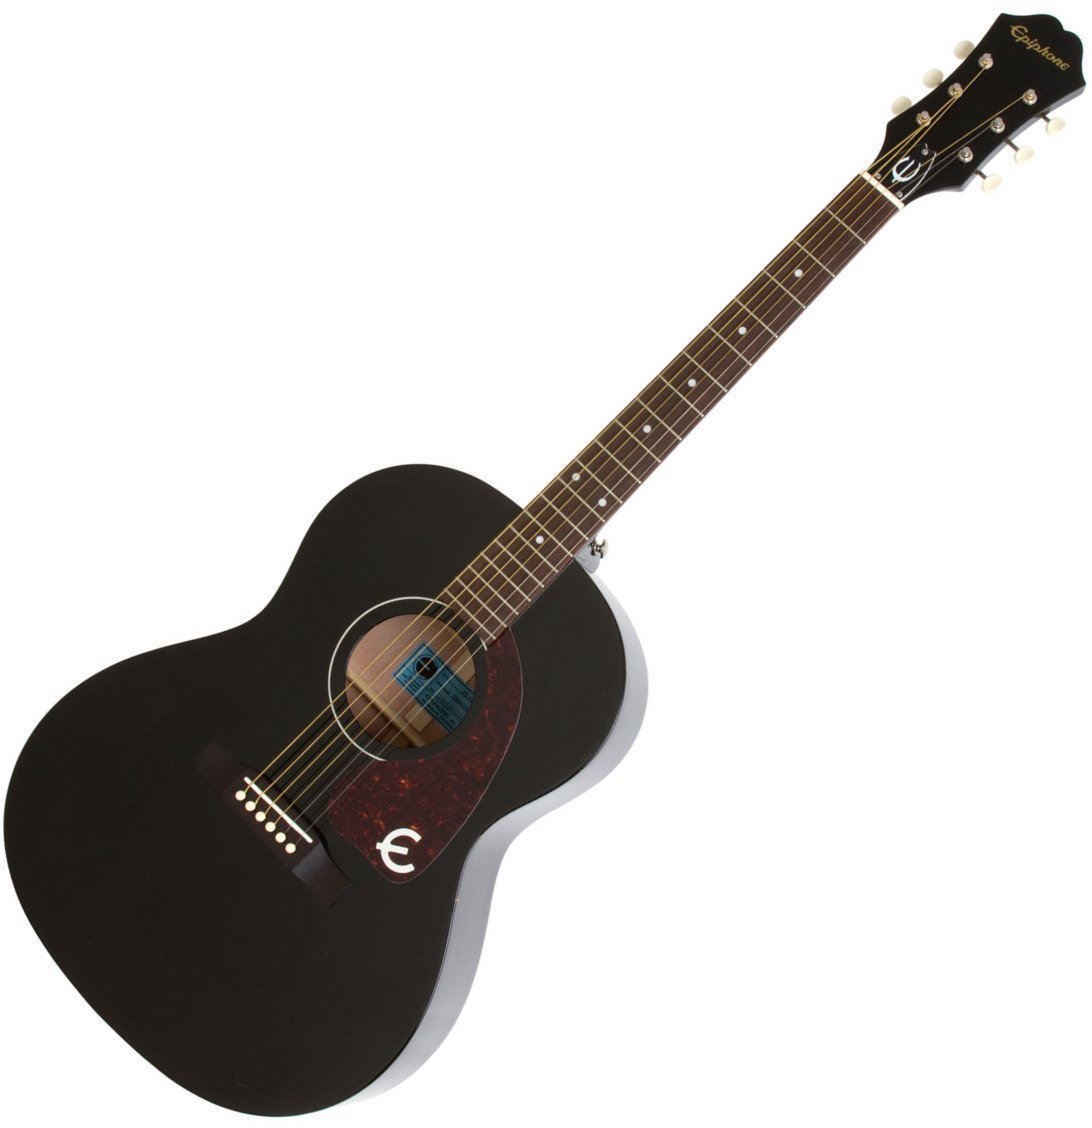 Elektroakustinen kitara Epiphone Caballero 50th Anniversary Black